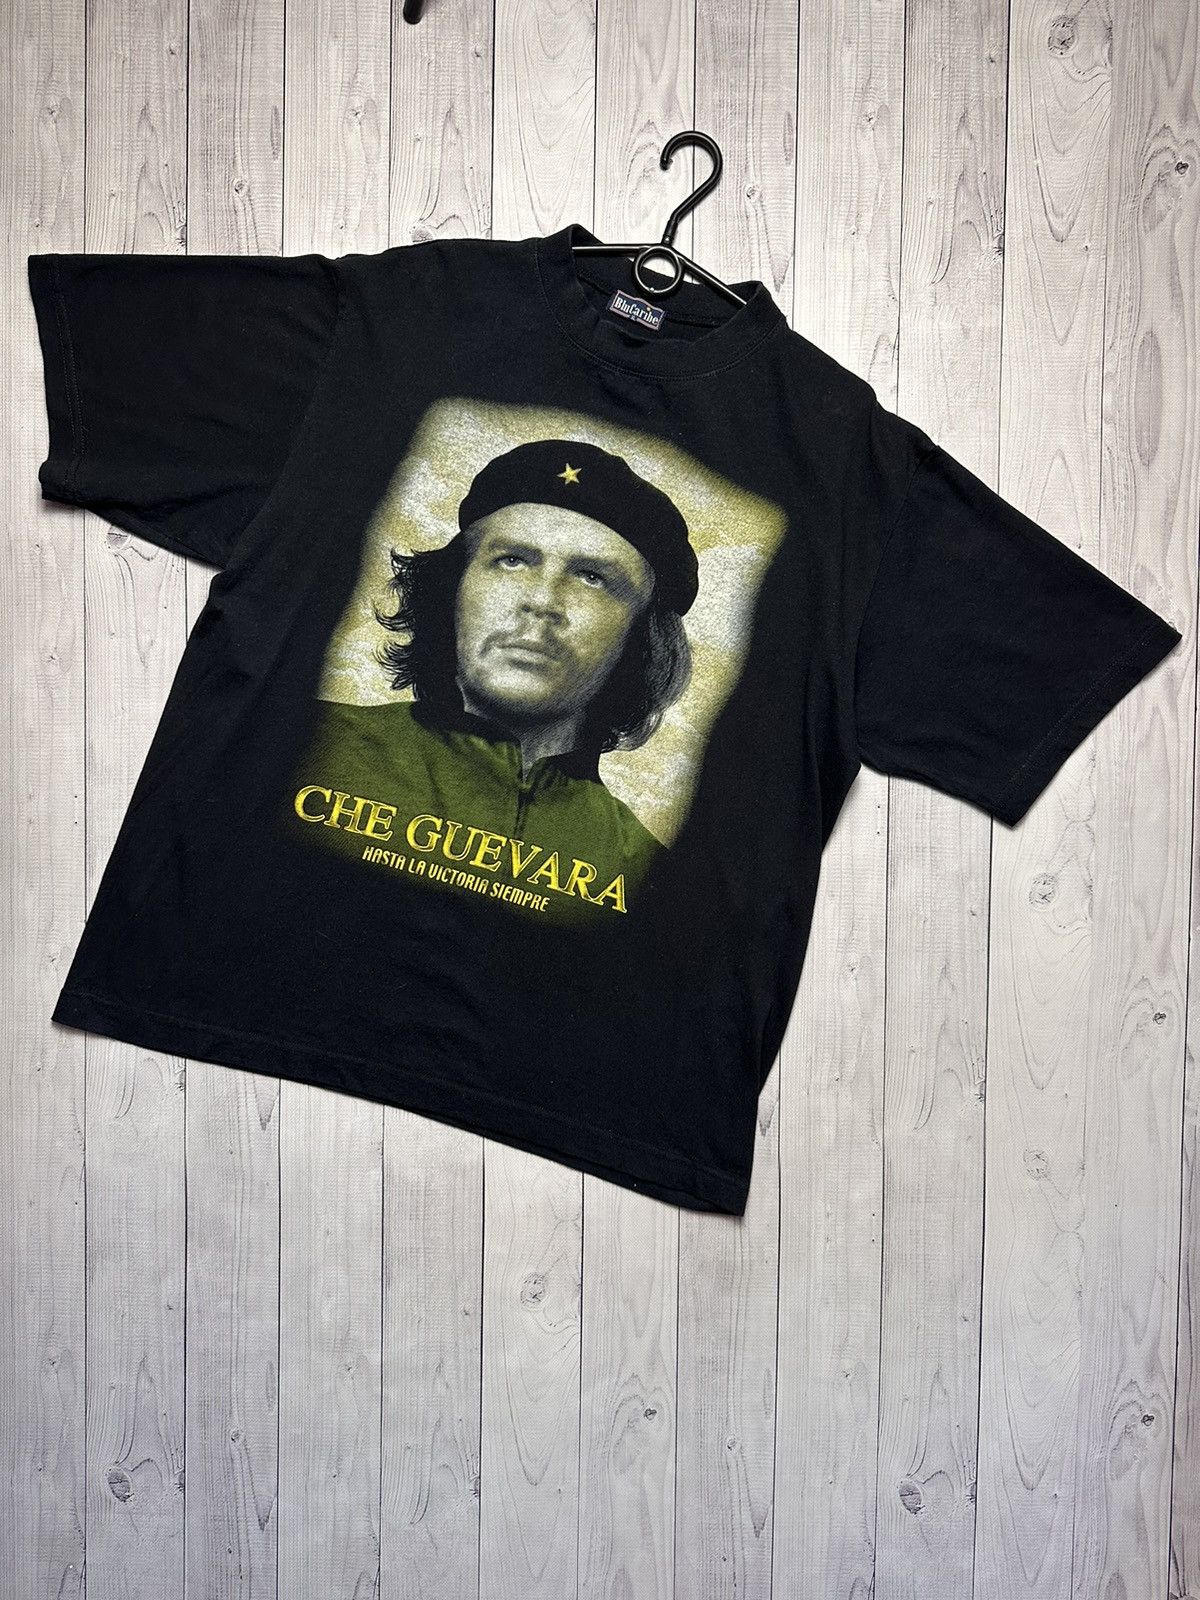 Revolucion Hasta La Victoria Siempre Che Guevara T-Shirts, Hoodies, Sweater